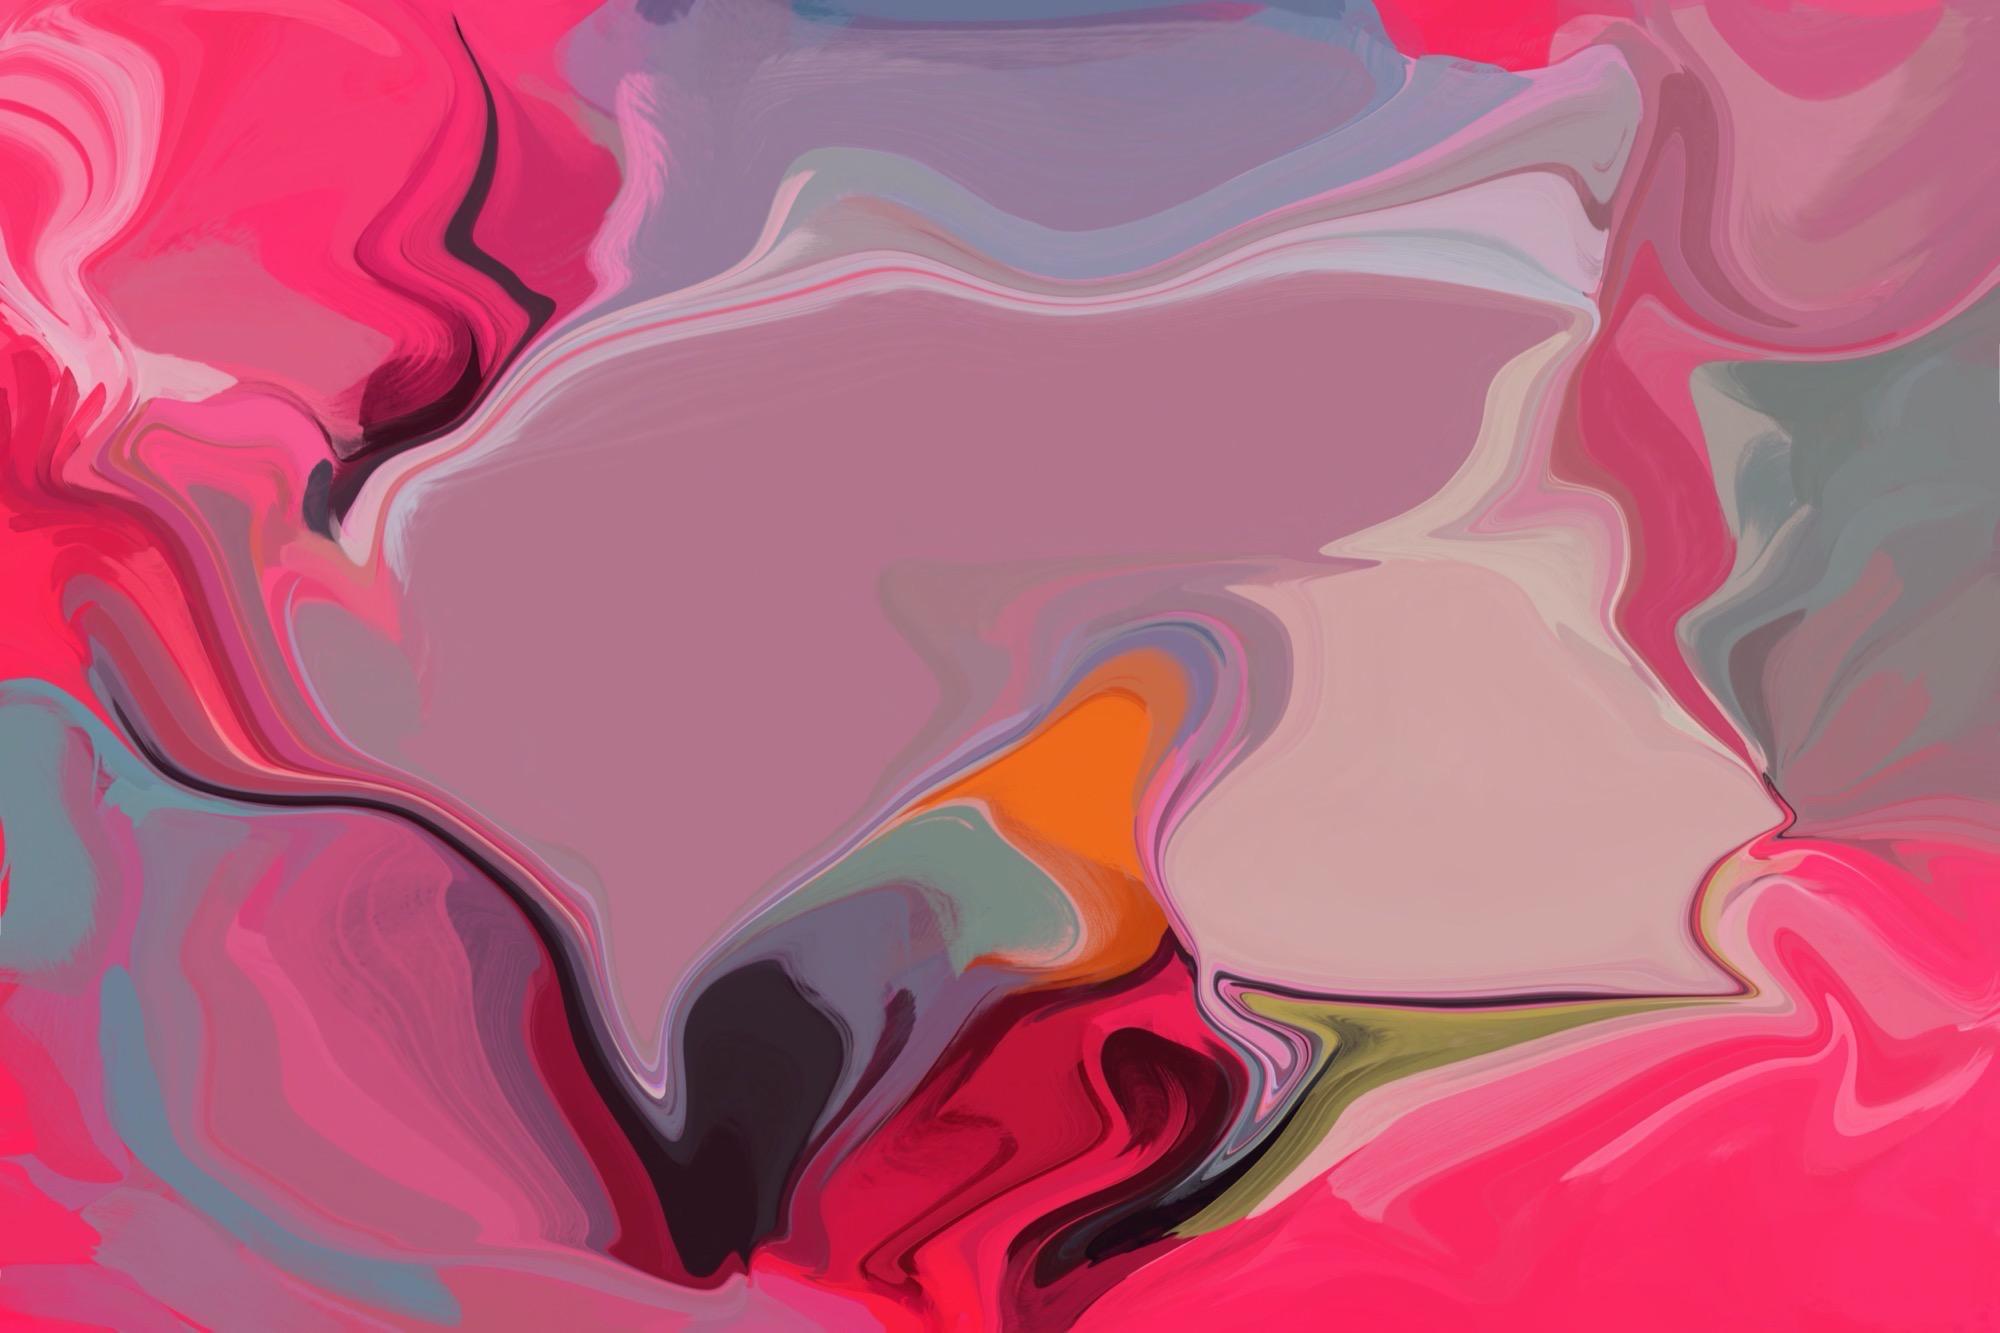 Peinture rose sur toile technique mixte, 45 x 60 po., The Creative Struggle